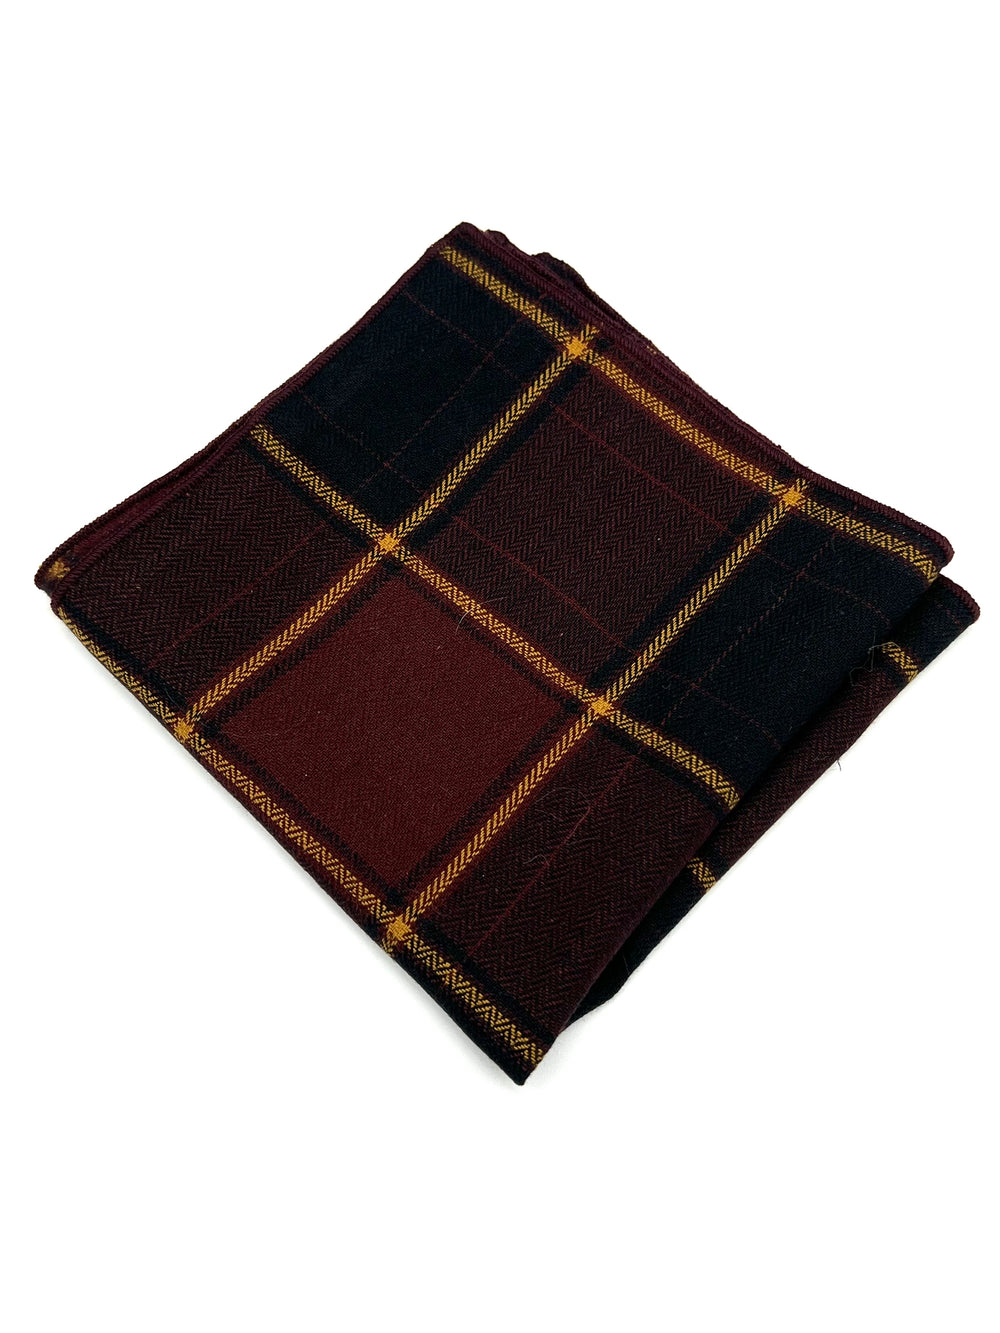 The Watson Plaid Handkerchief